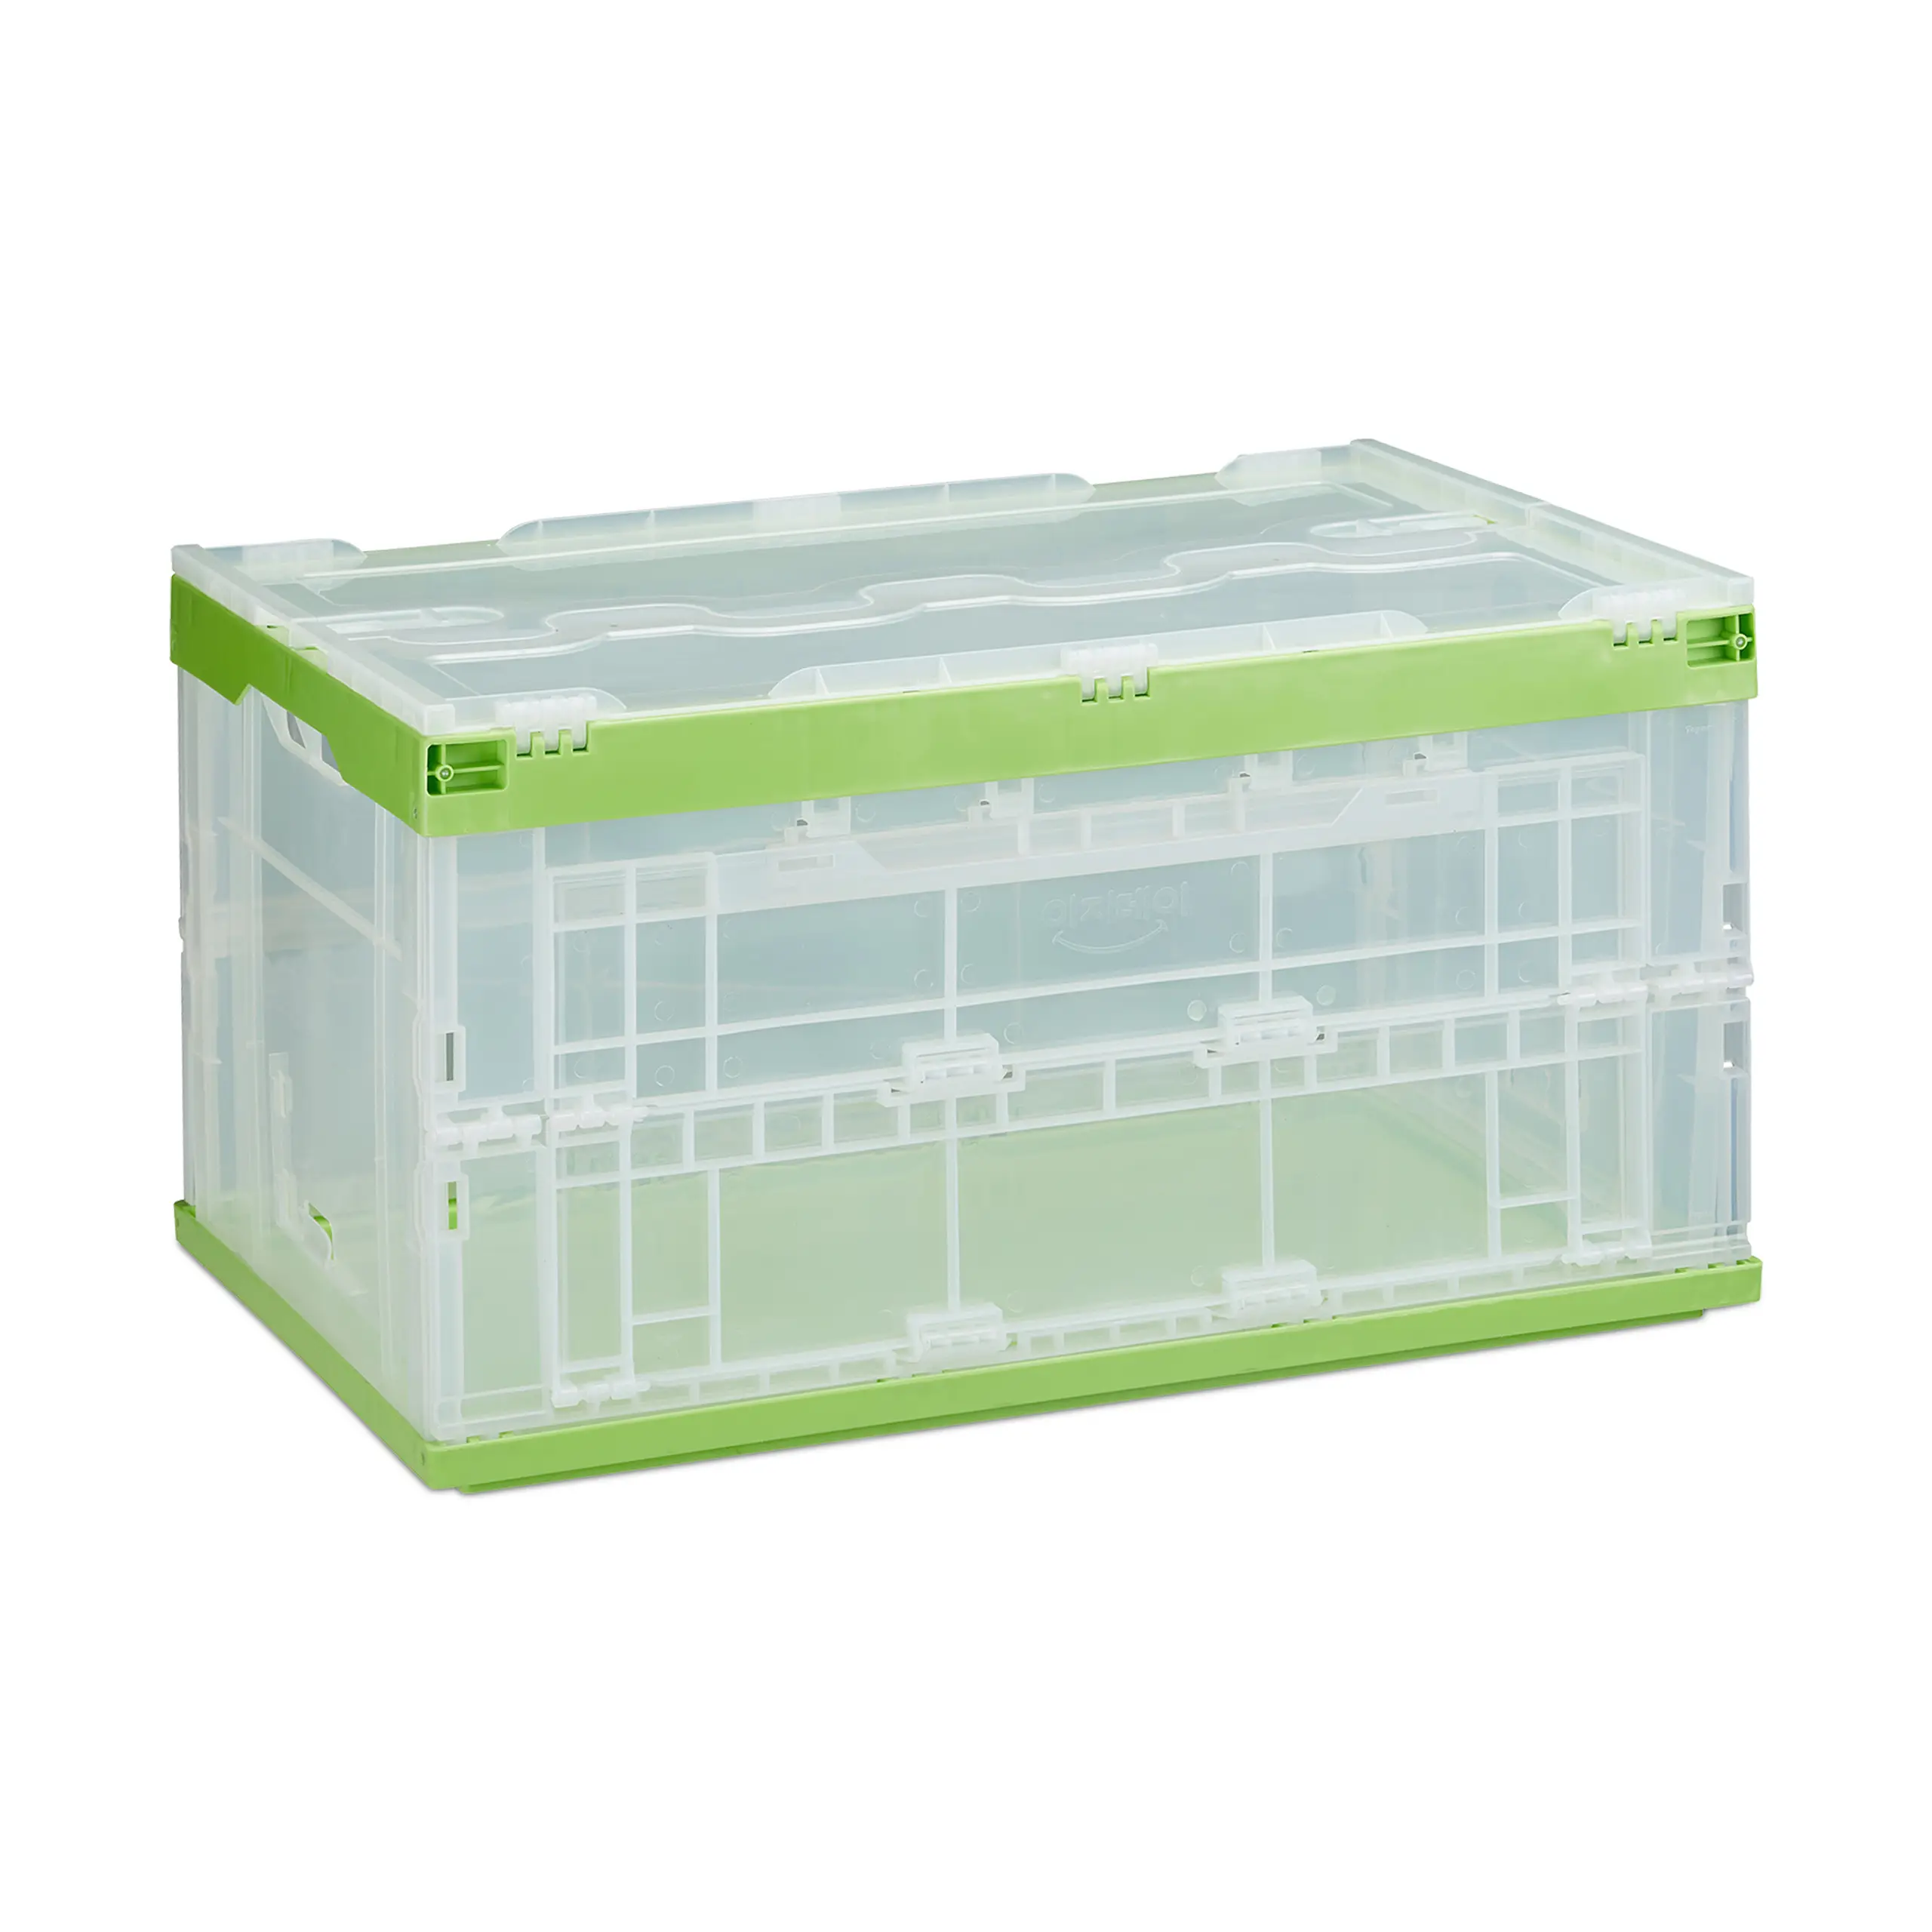 Deckel Transportbox 1 x gr眉n-transparent